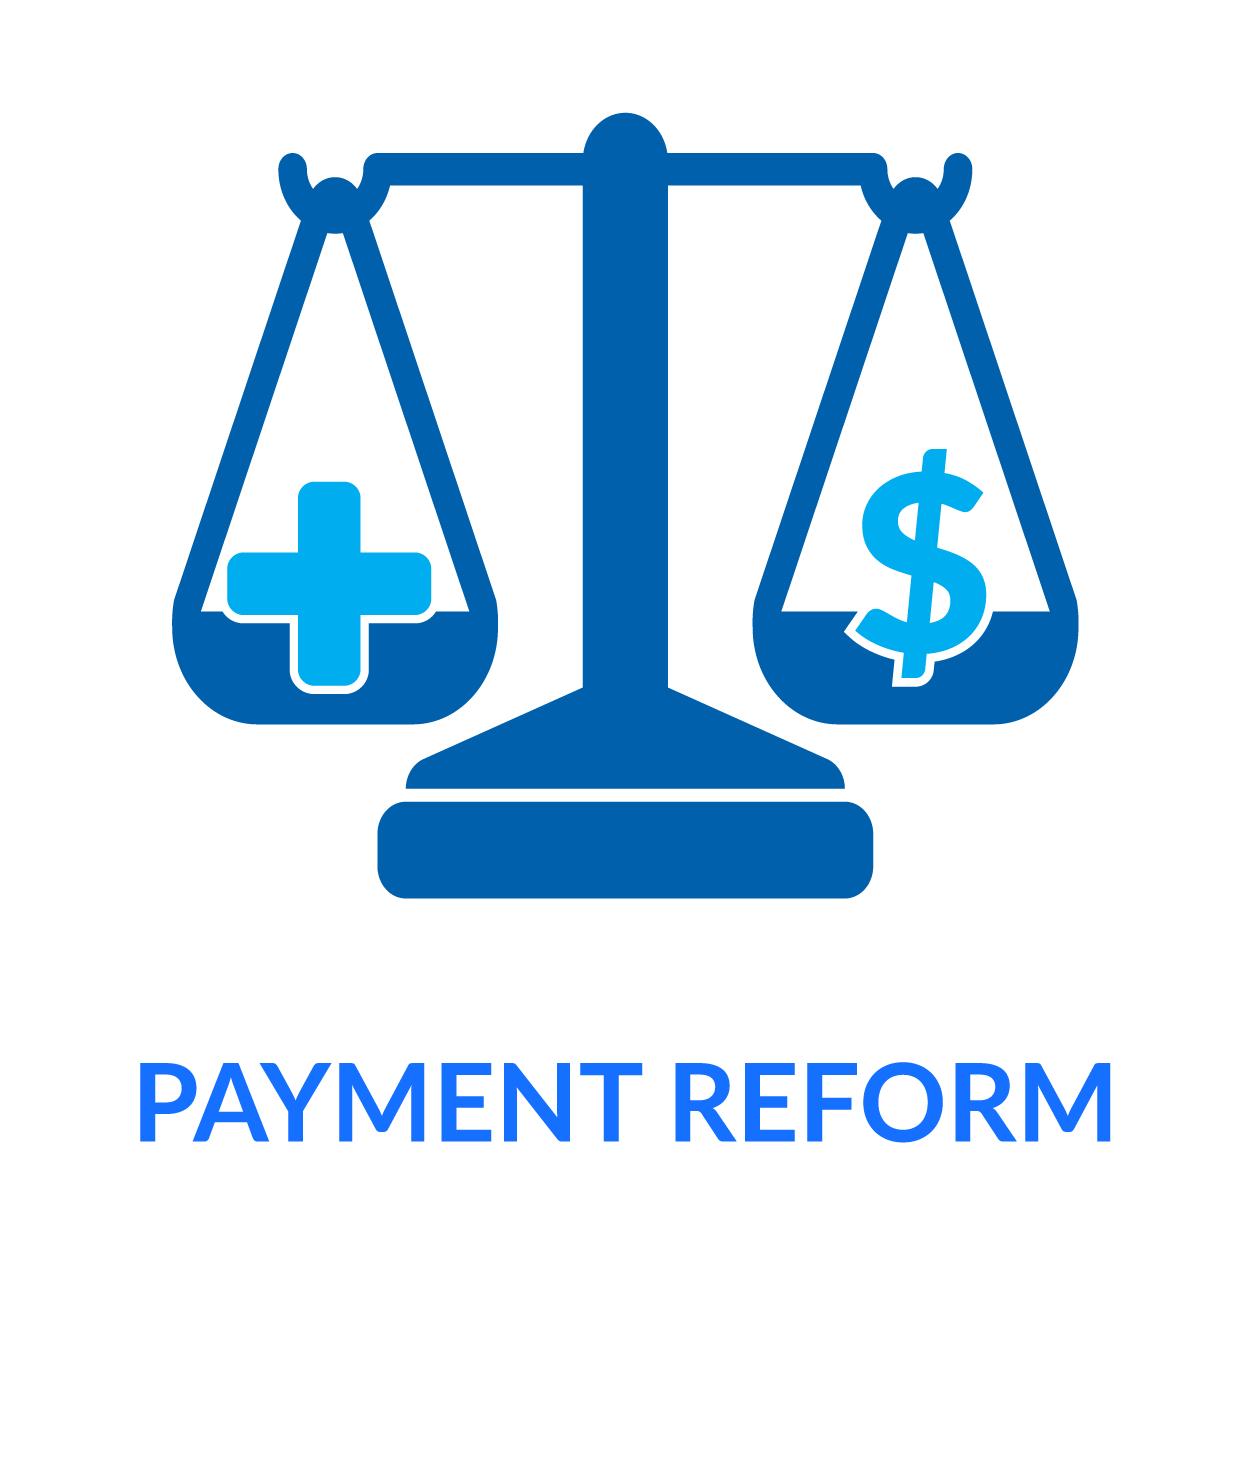 Payment reform